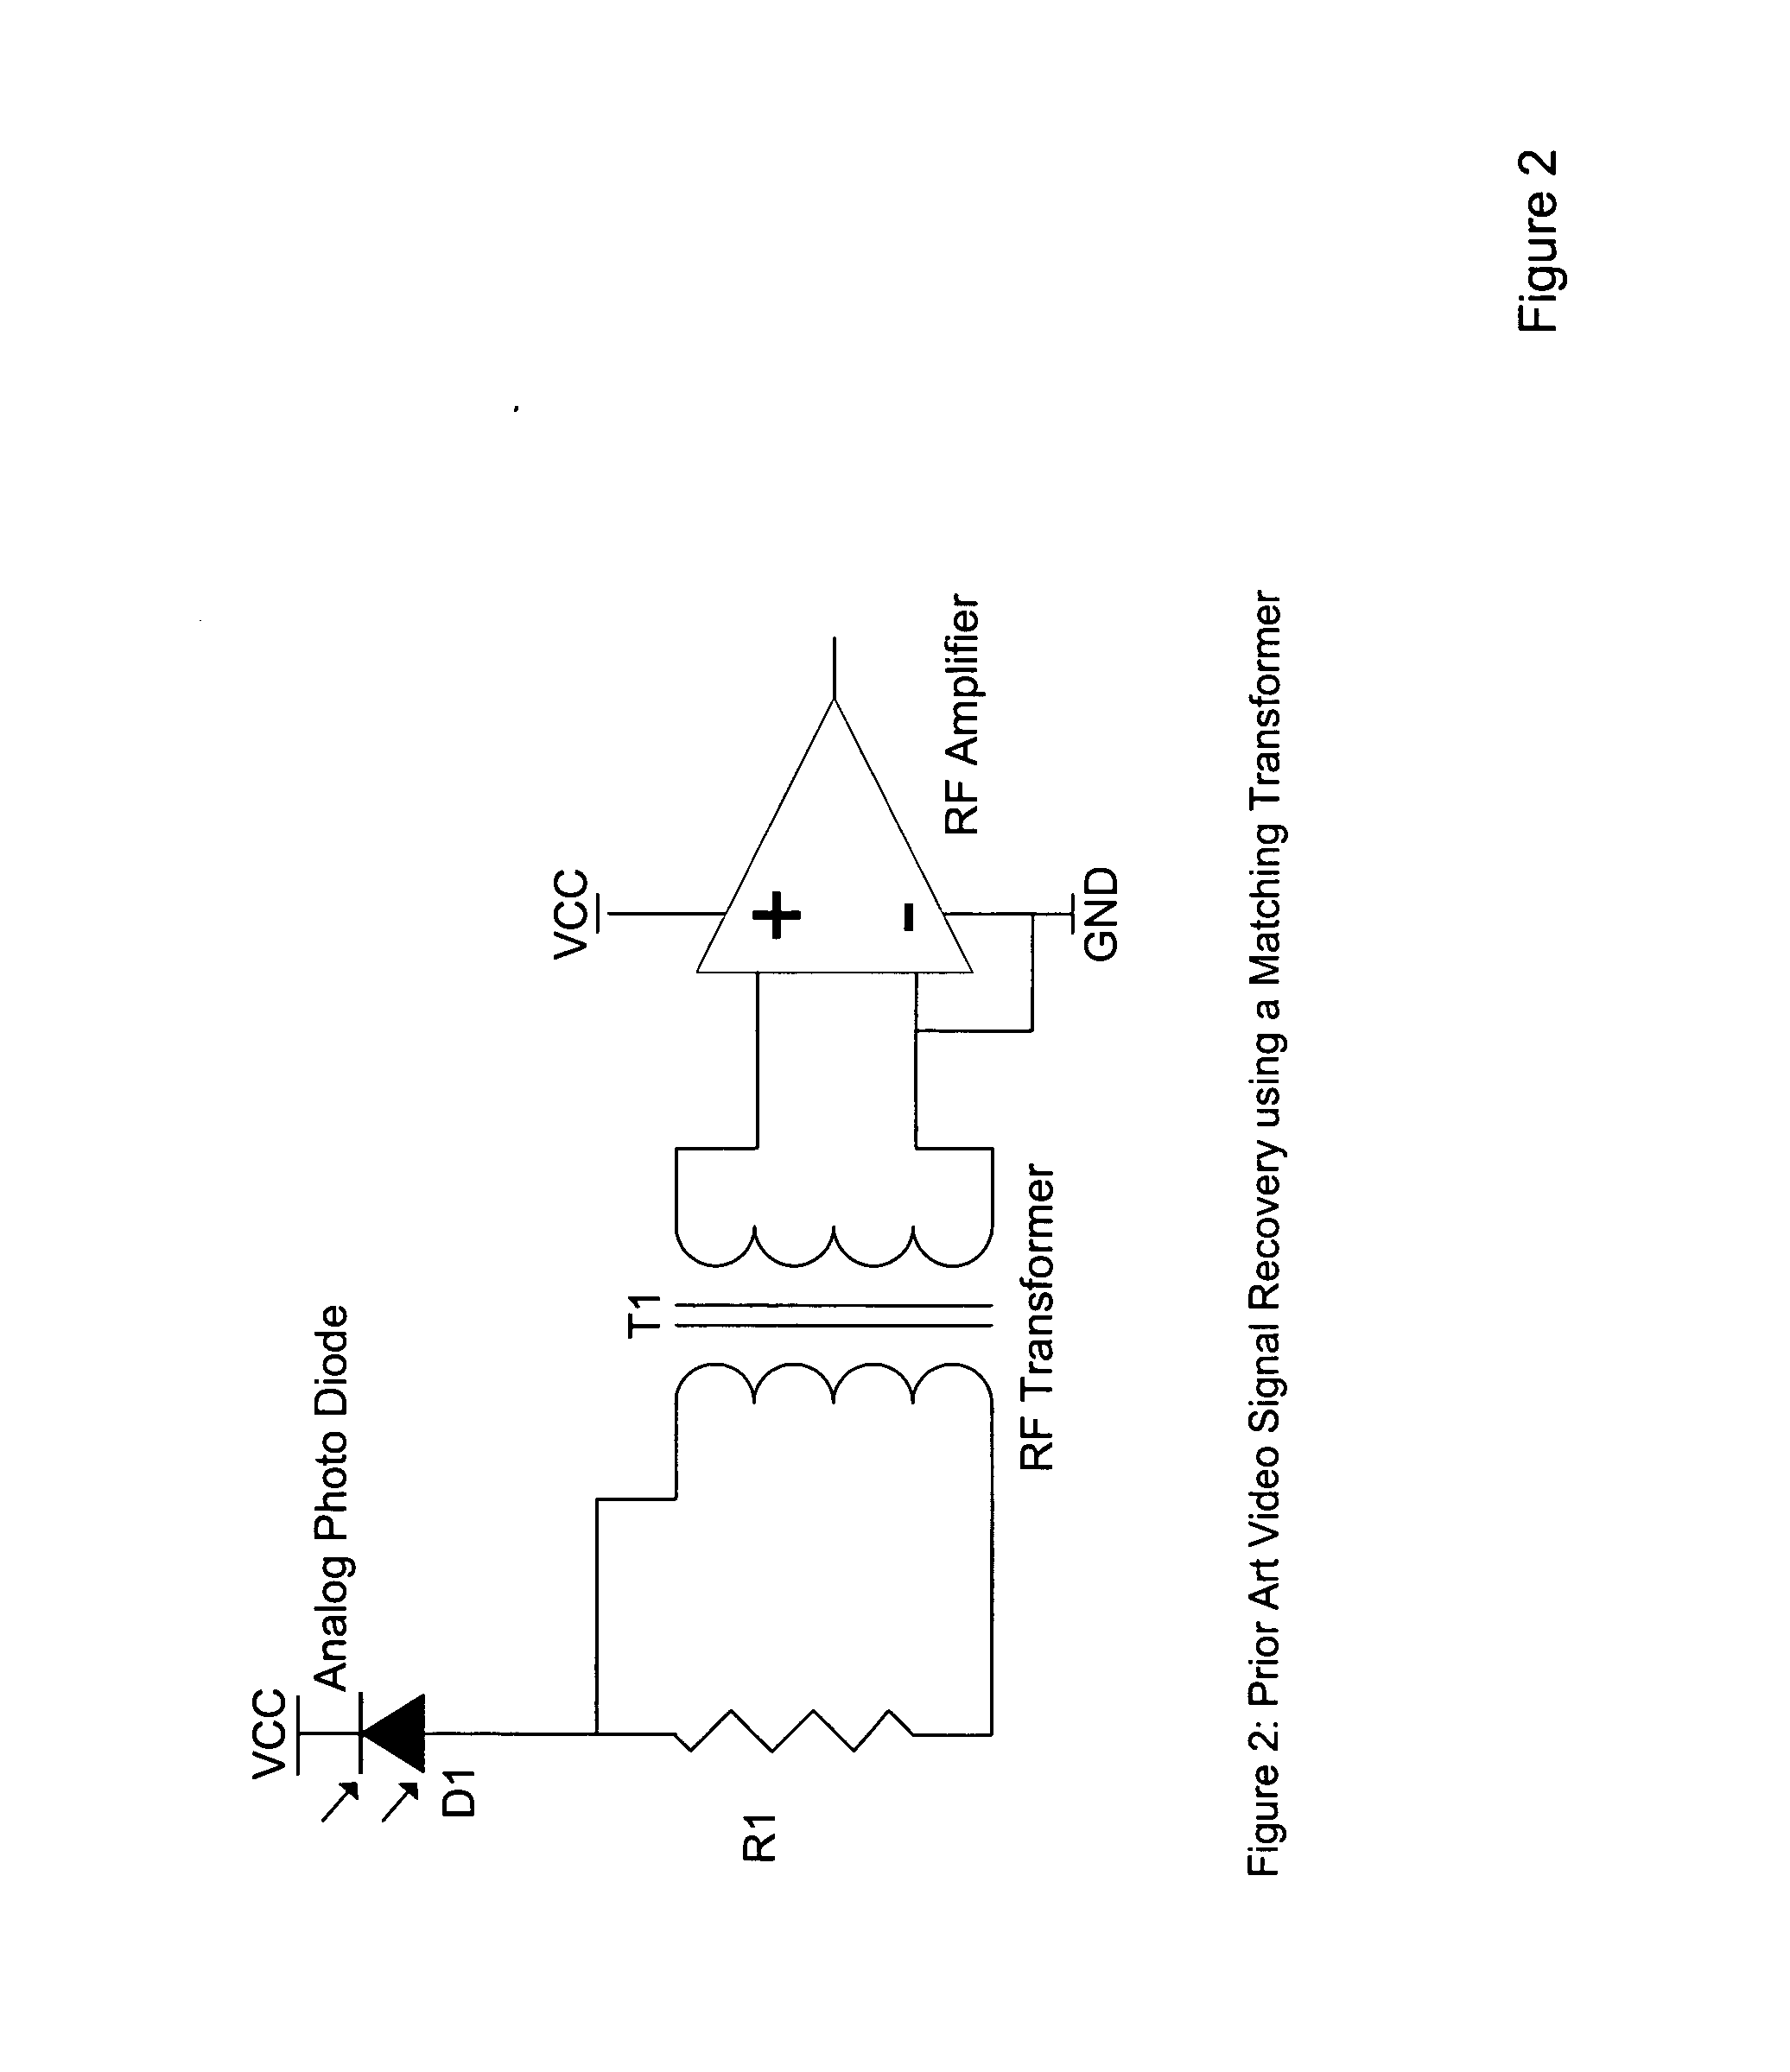 Linearized trans-impedance amplifier